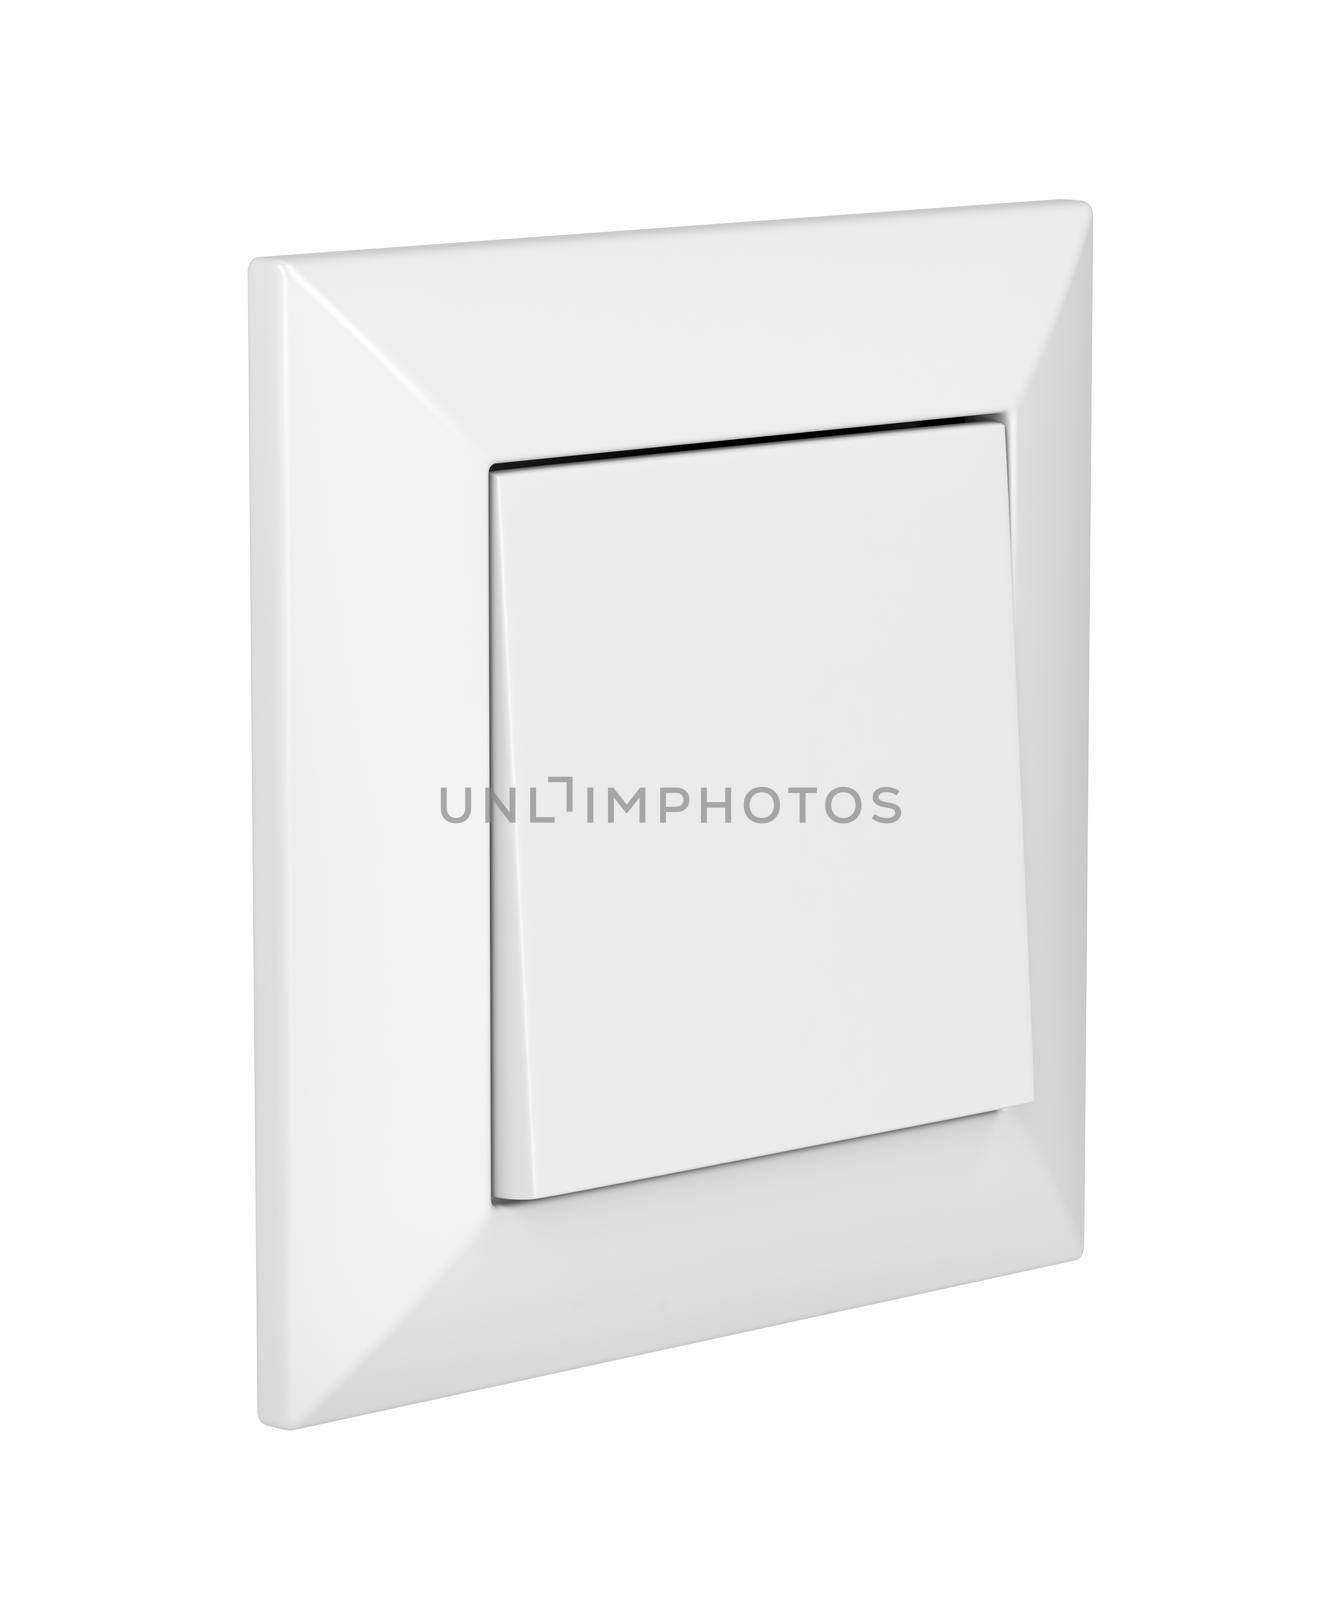 White light switch isolated on white background